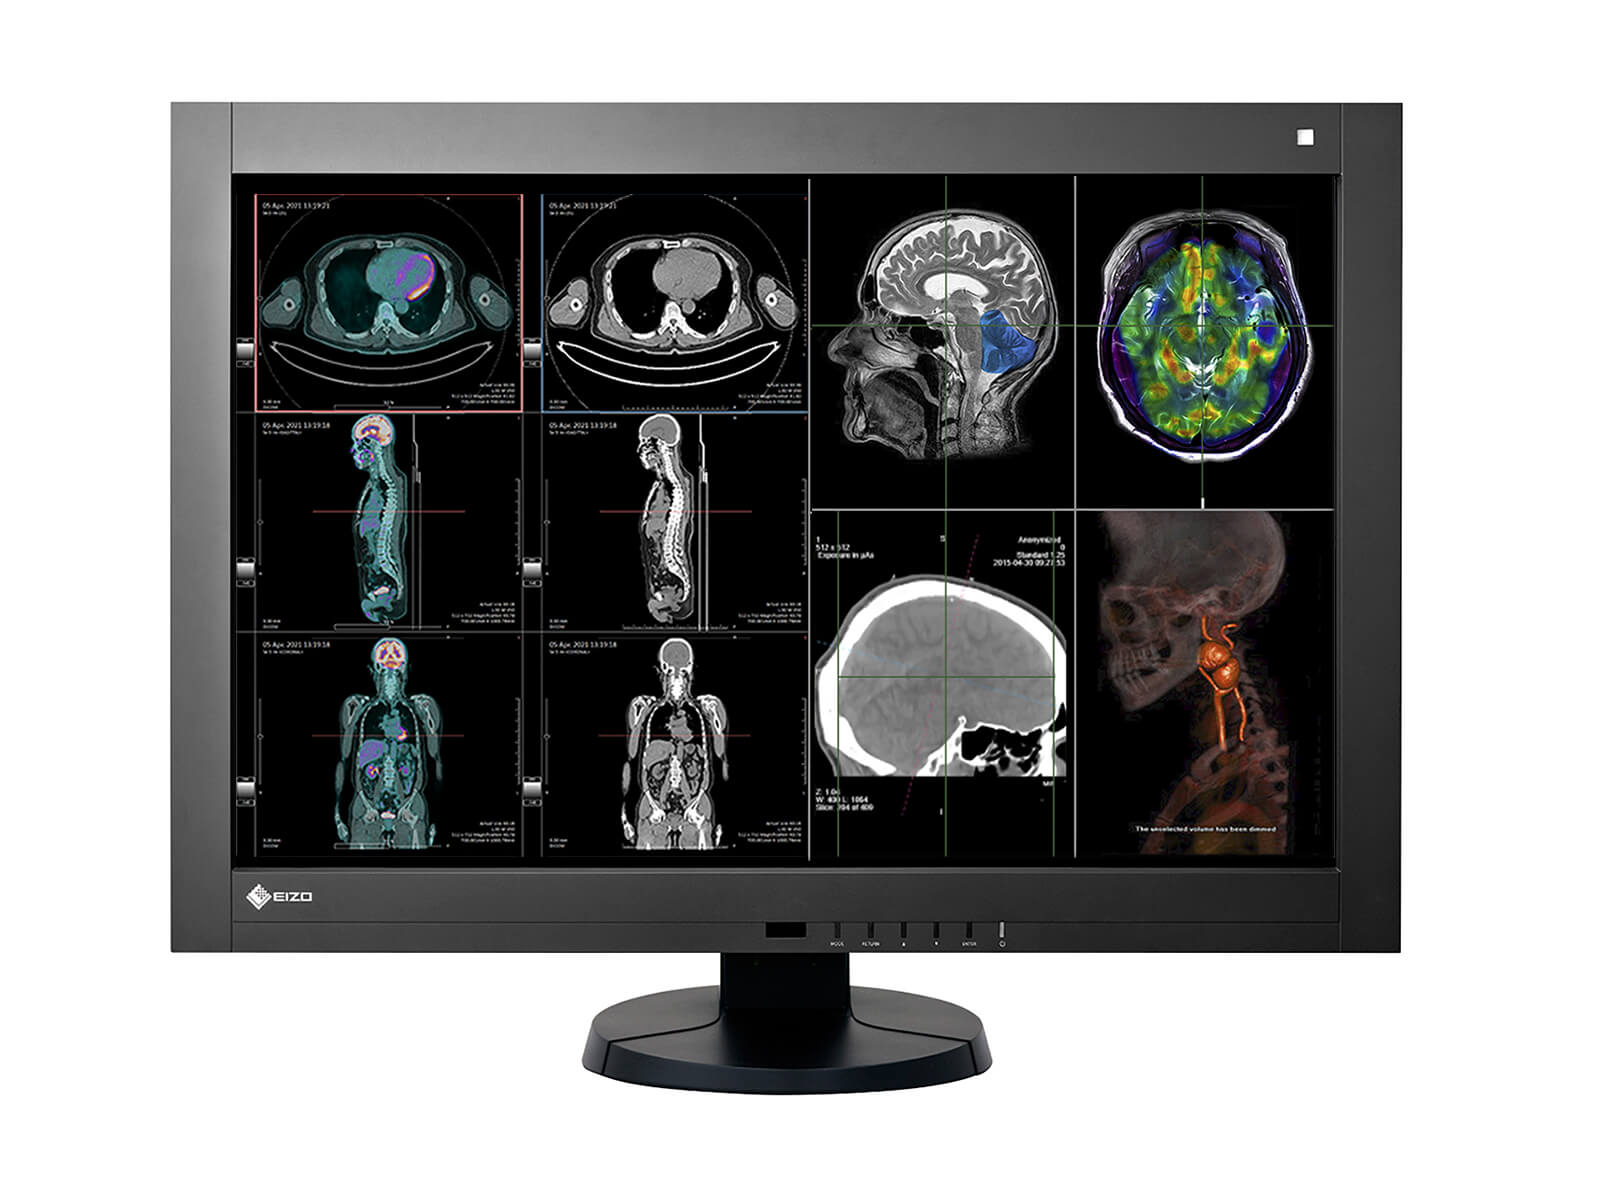 Eizo RadiForce RX440 4MP 30" Color LED General Radiology PACS Display (RX440-BK) Monitors.com 